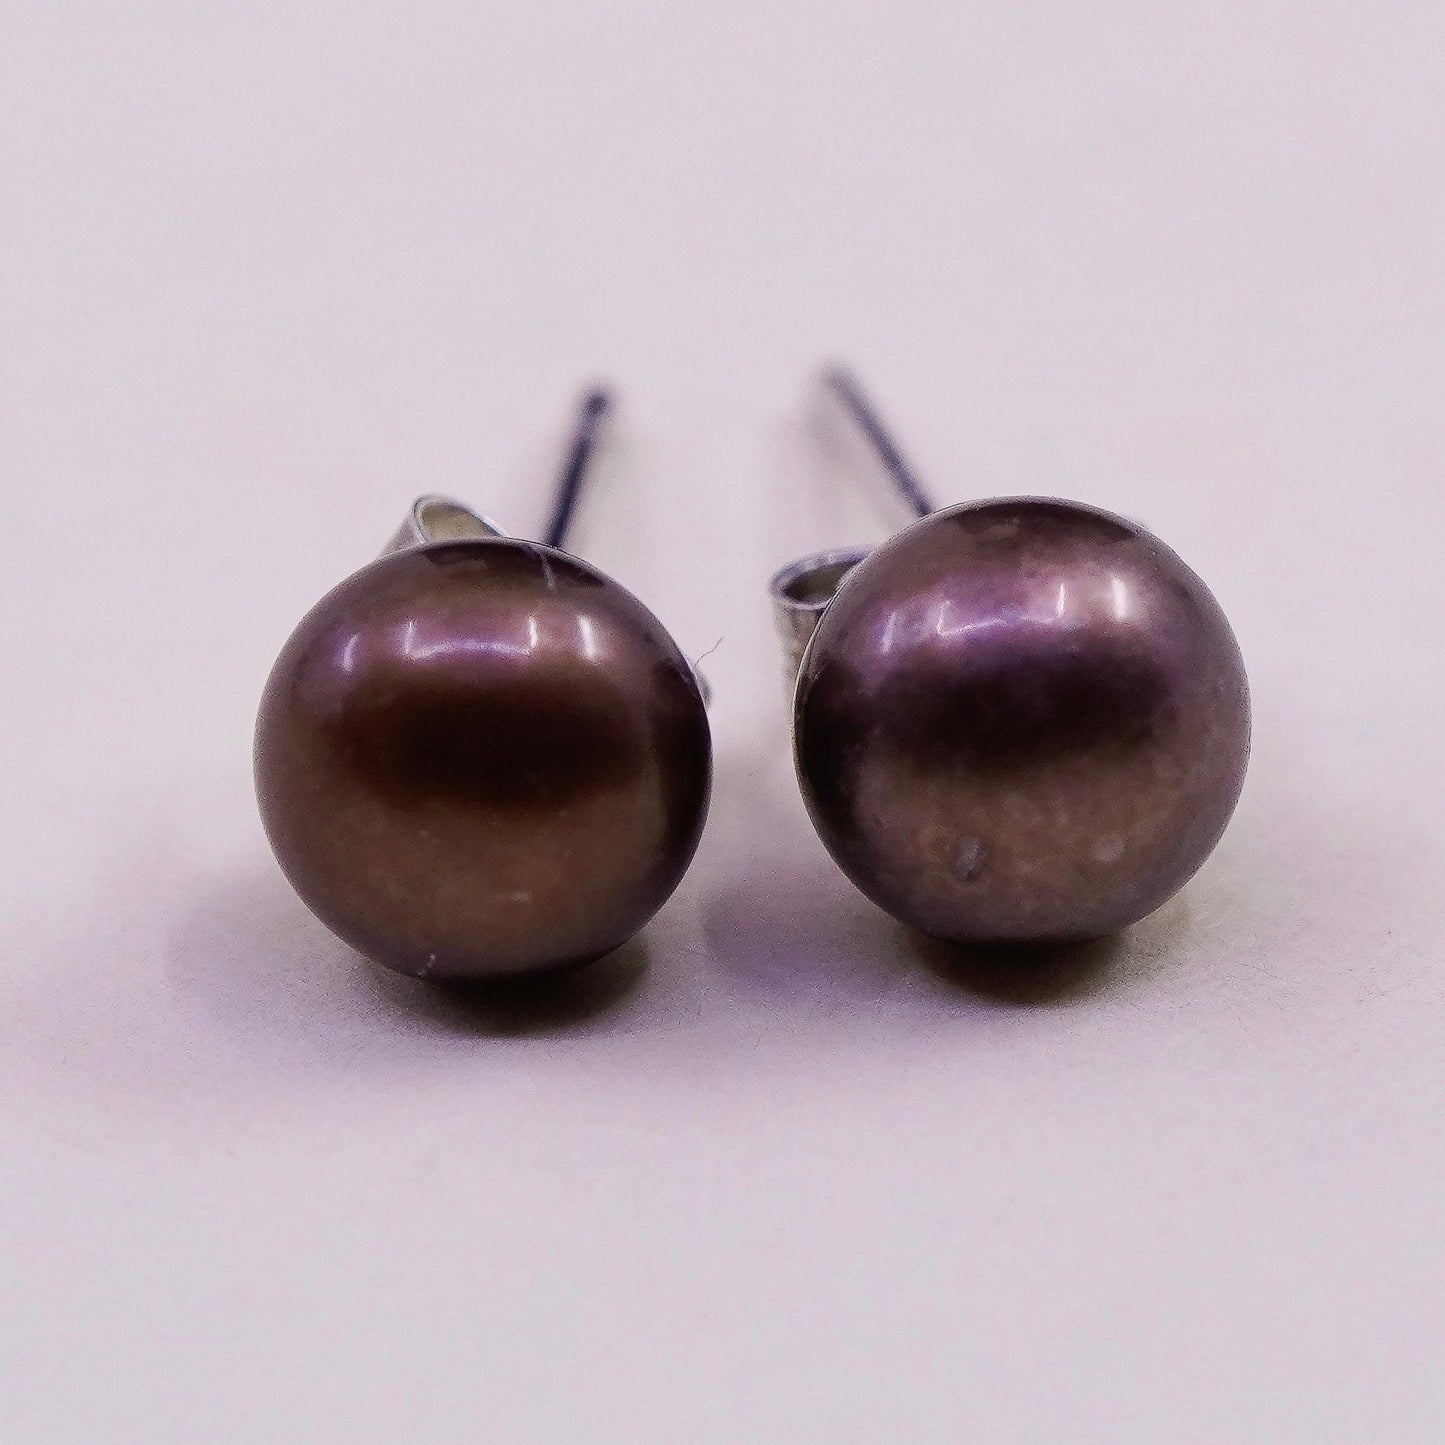 Vintage sterling silver earrings, 925 studs with brown pearl